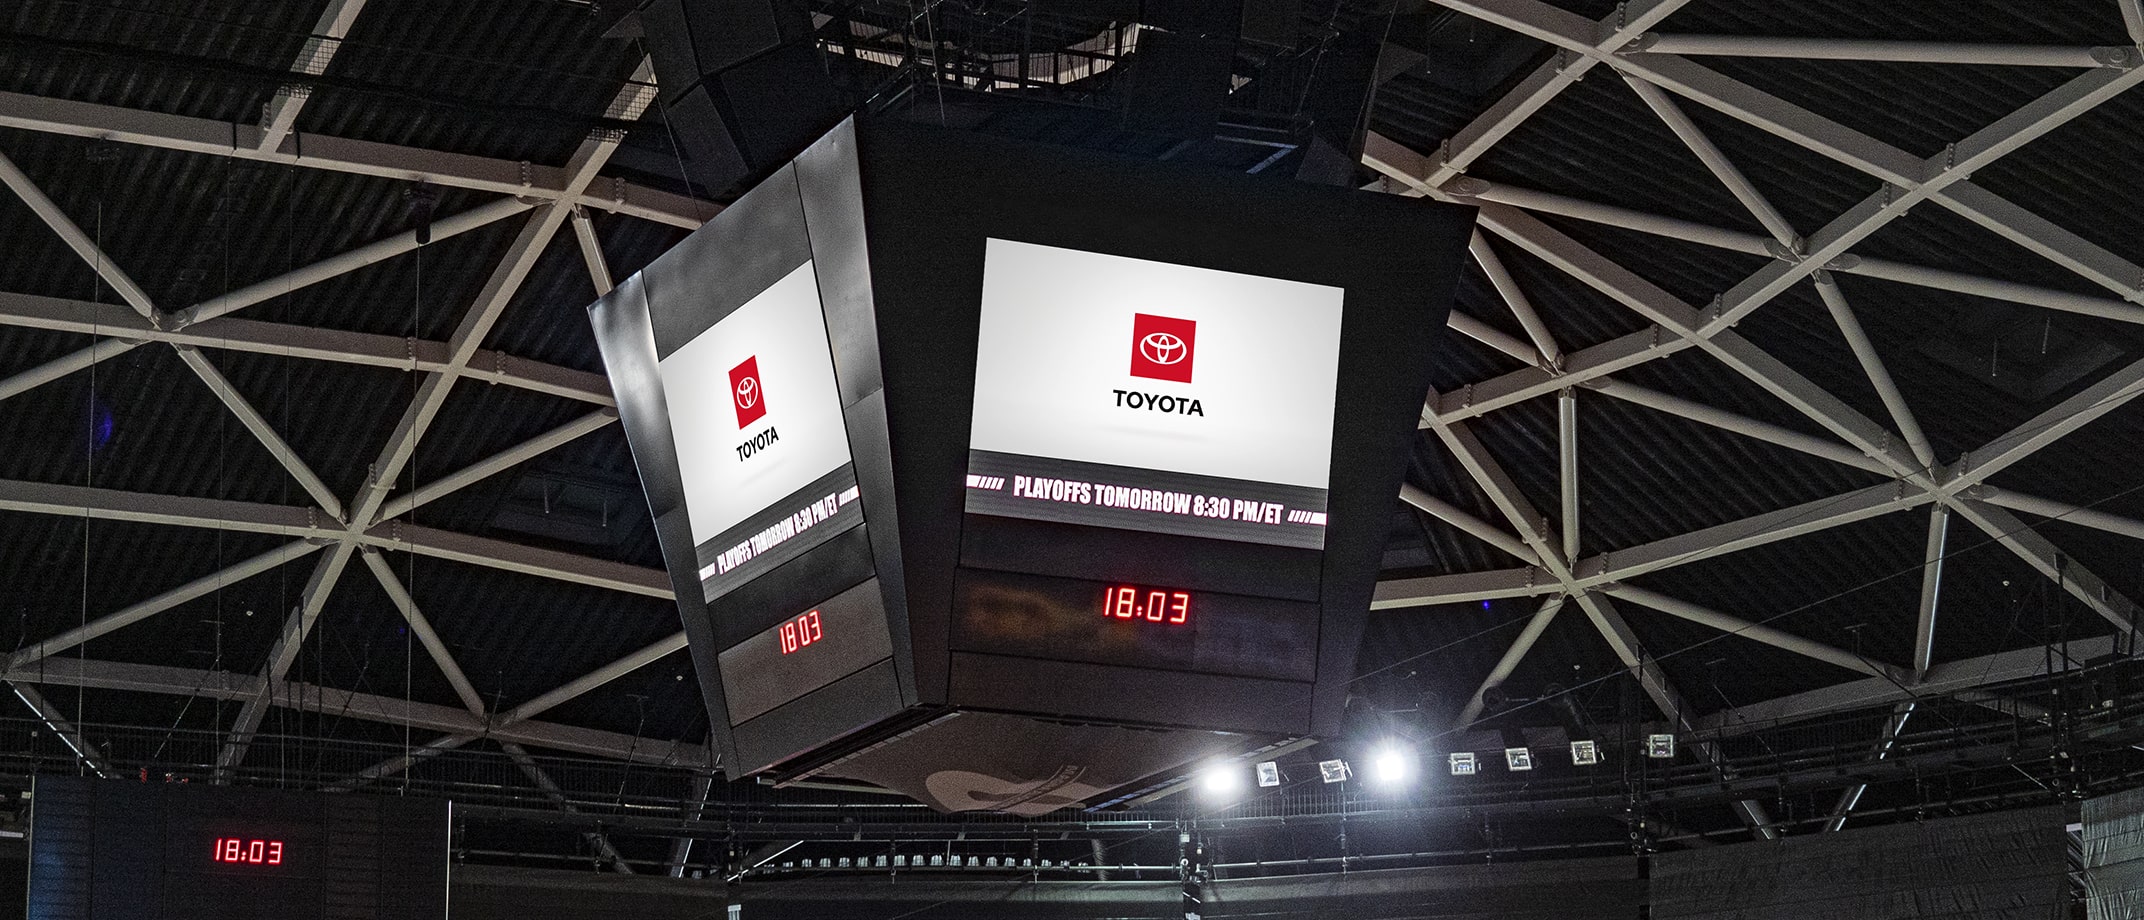 A jumbotron screen in a stadium at night displaying the Toyota logo.